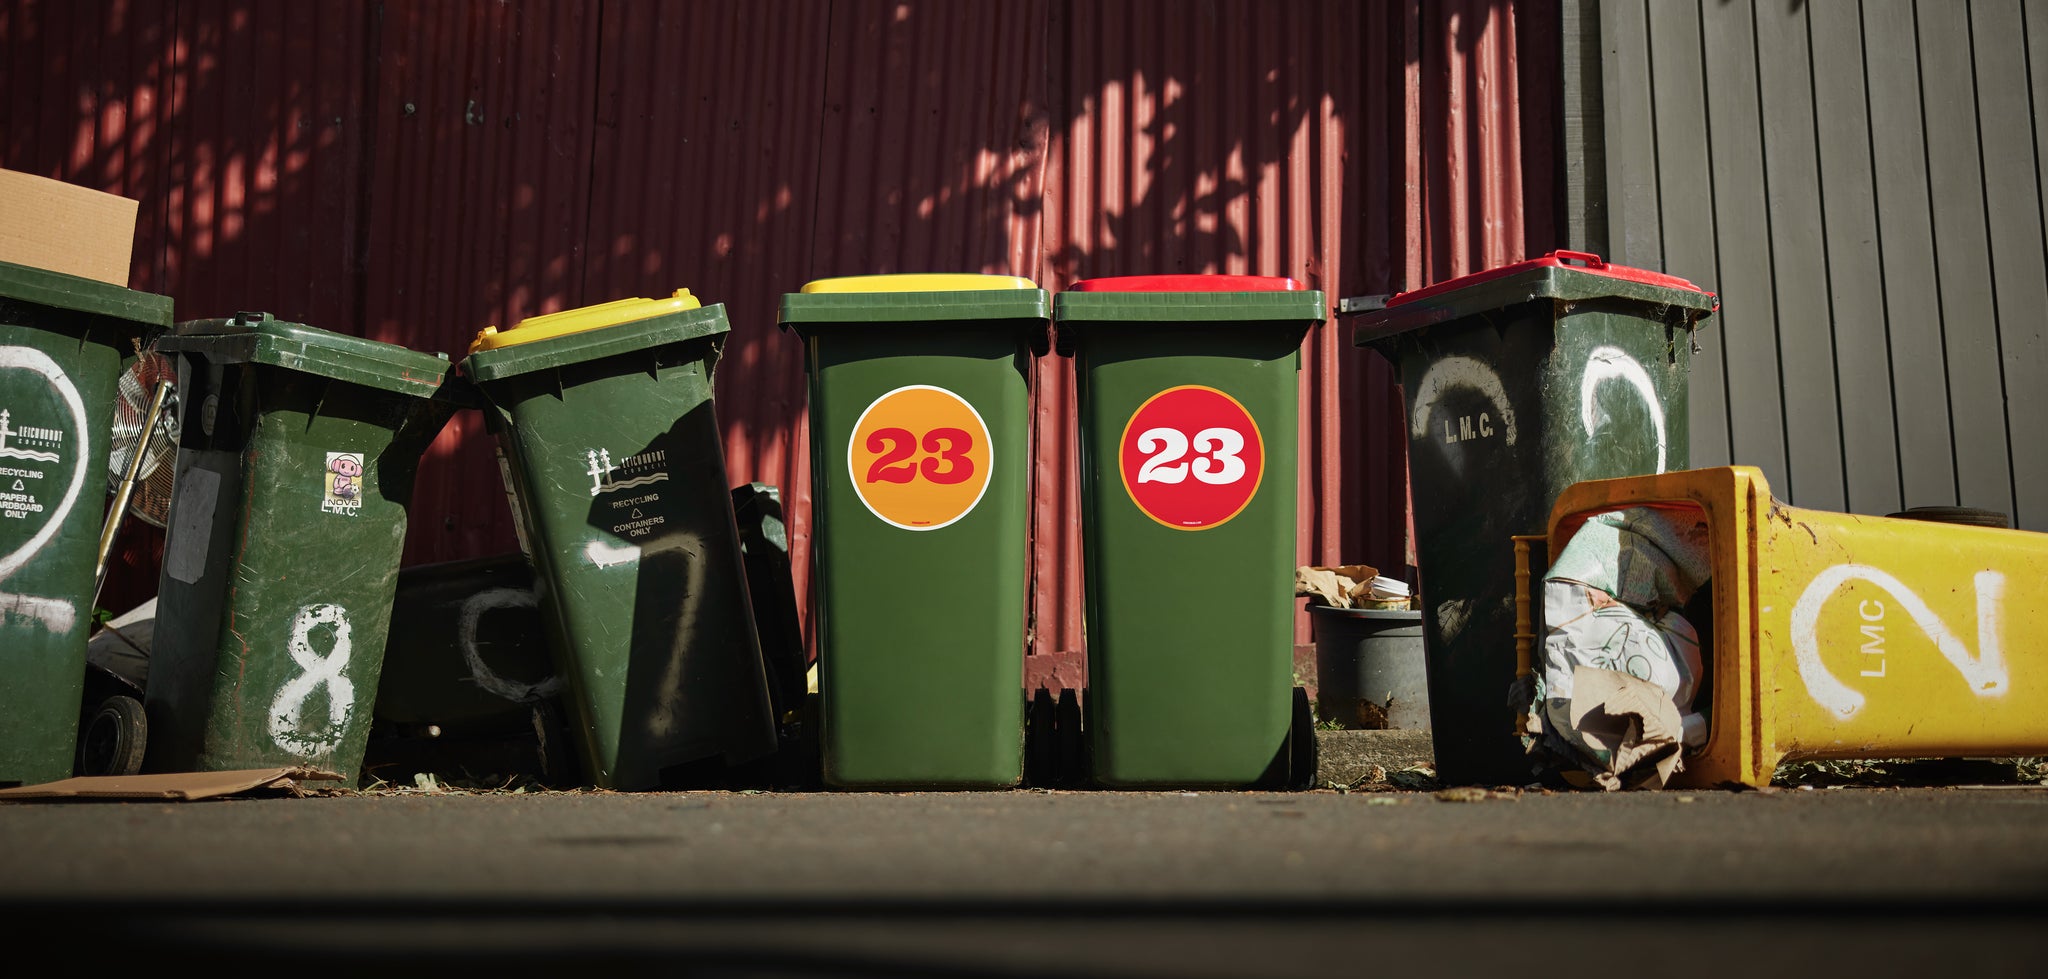 Pair of Custom Suburbin bin stickers looking beautiful amongst other trashy bins in a laneway. 